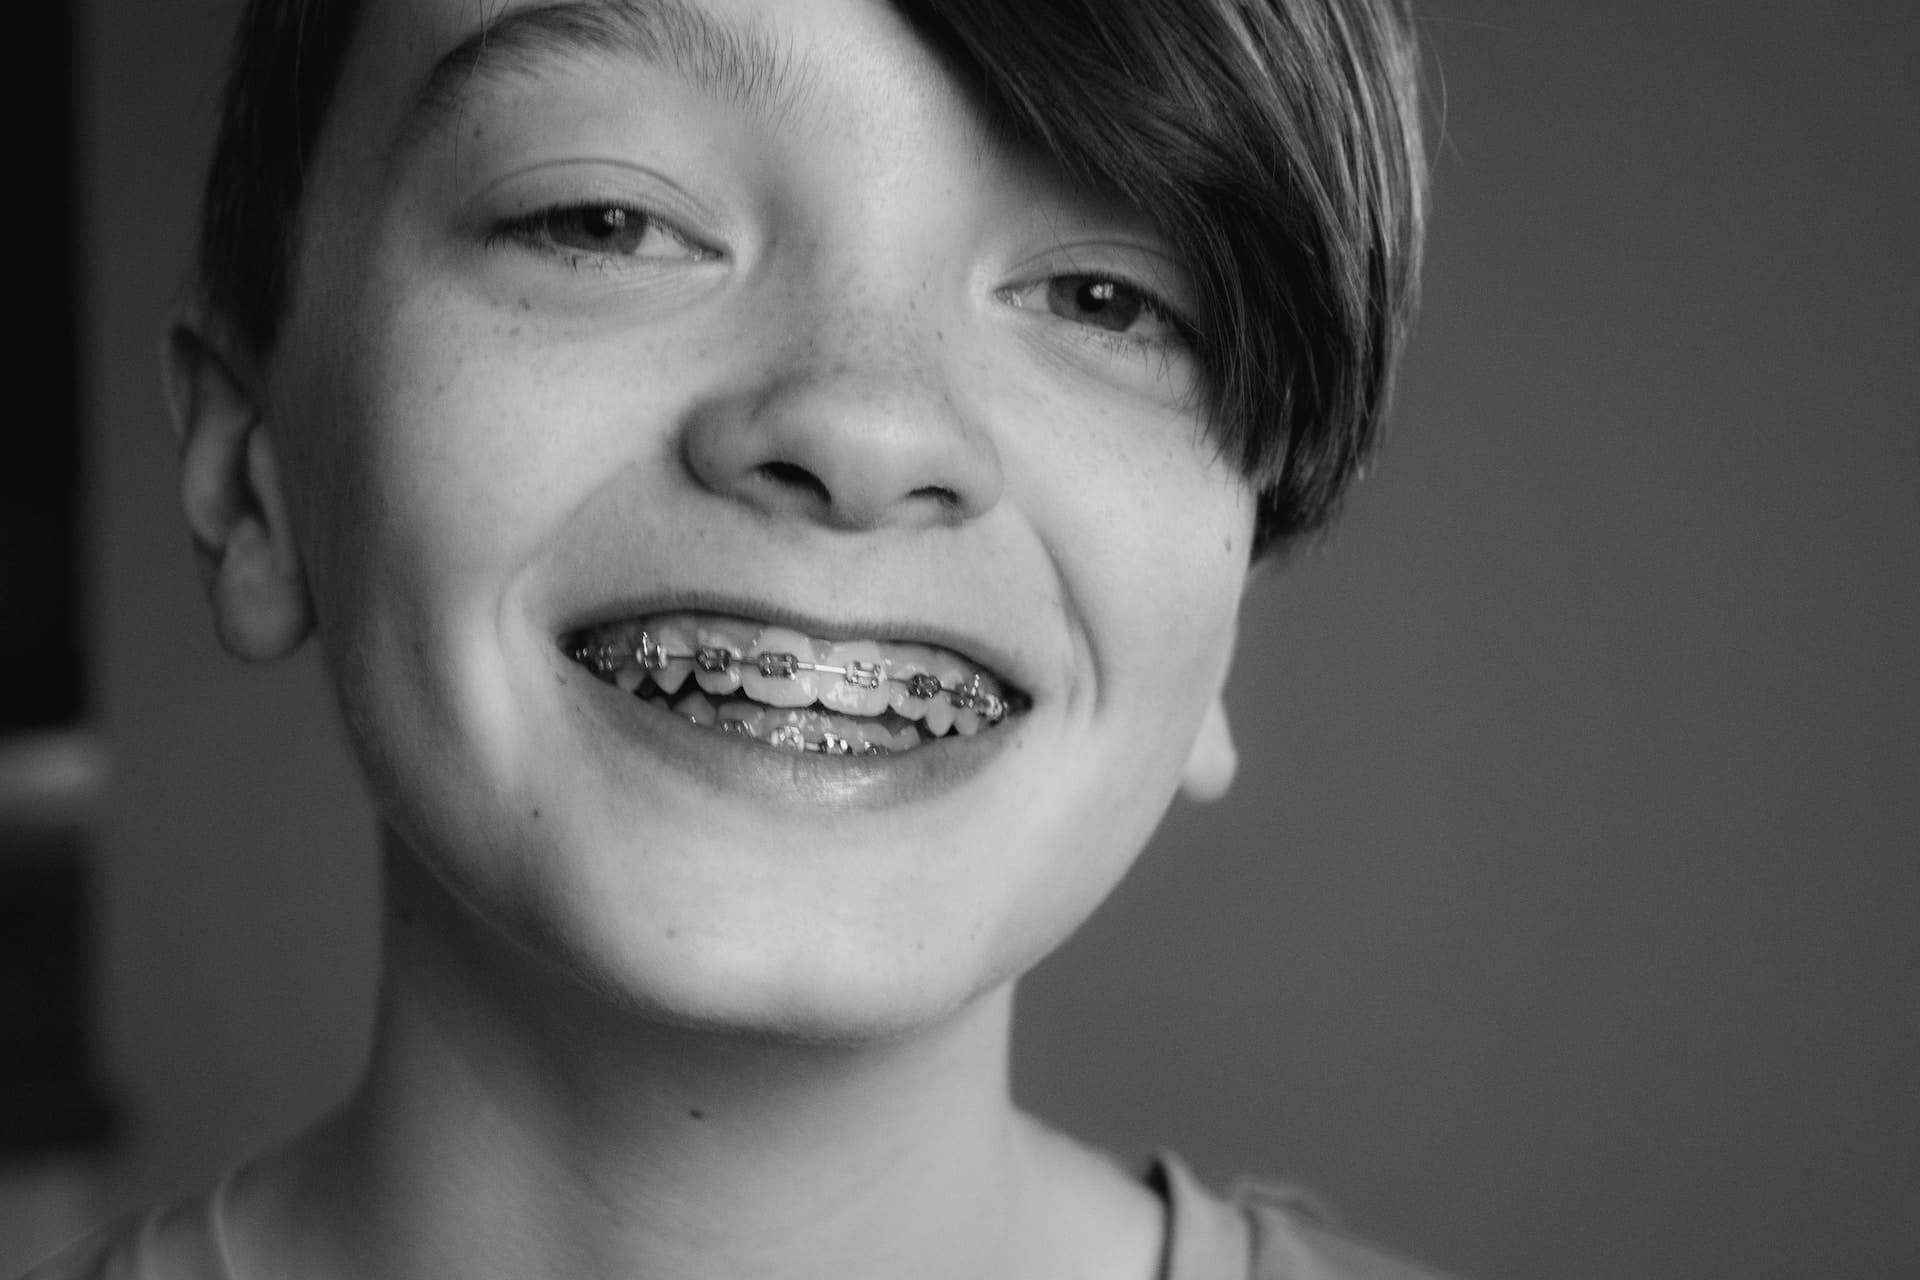 Teenage girl smiling while displaying braces on her teeth, expressing satisfaction.